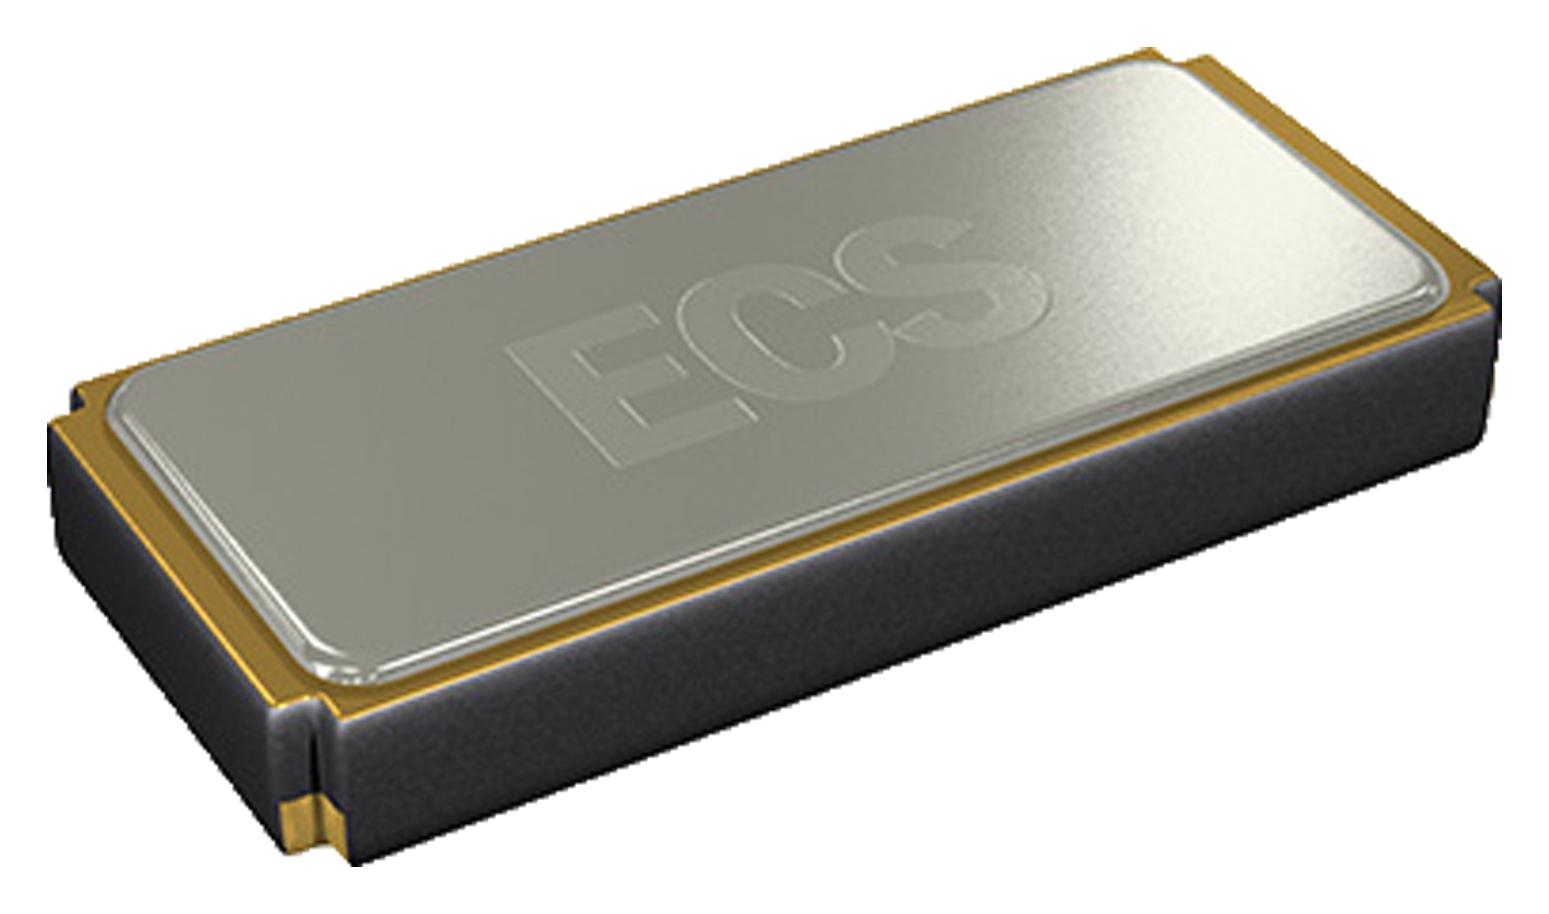 Ecs Inc International Ecs-.327-12.5-34Qcs-Tr Crystal, Aec-Q200, 32.768Khz, 3.2X1.5mm